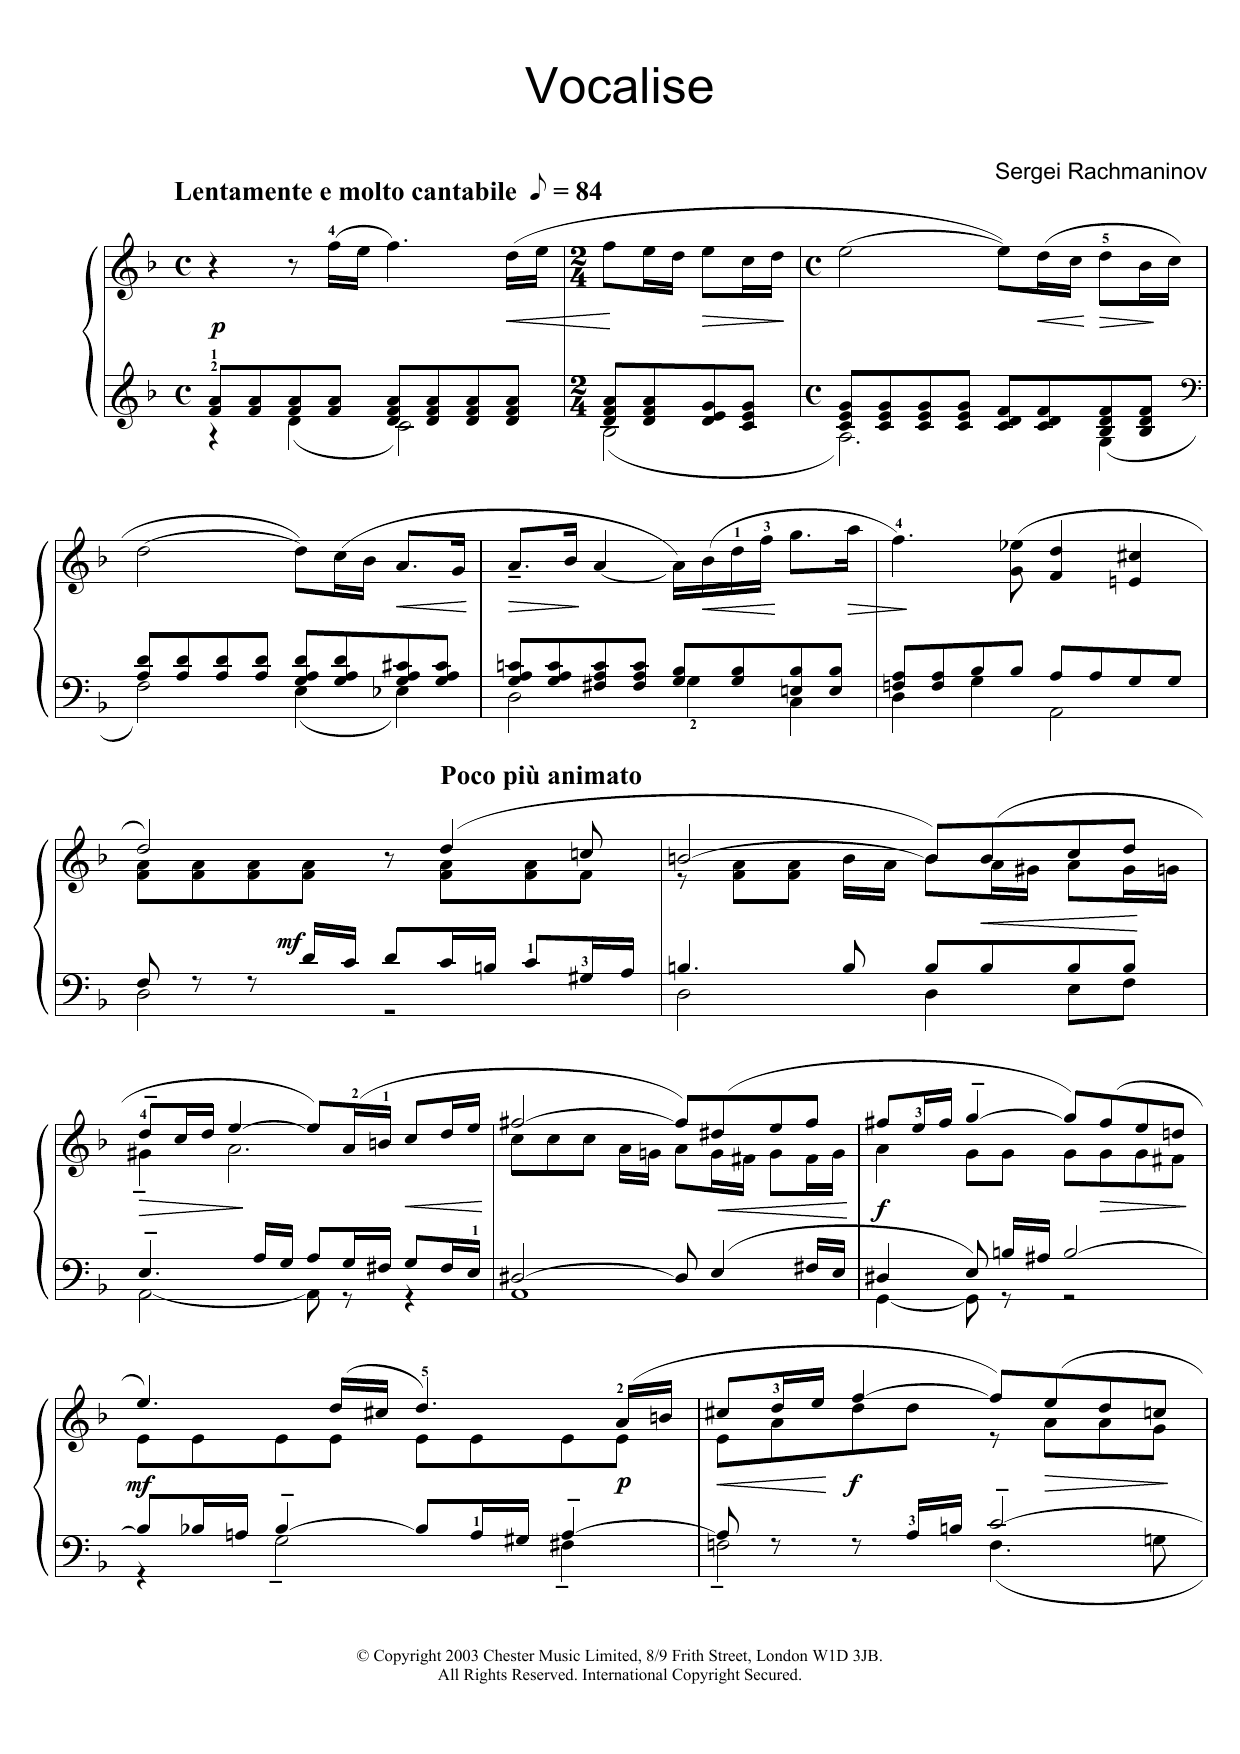 Download Sergei Rachmaninoff Vocalise Sheet Music